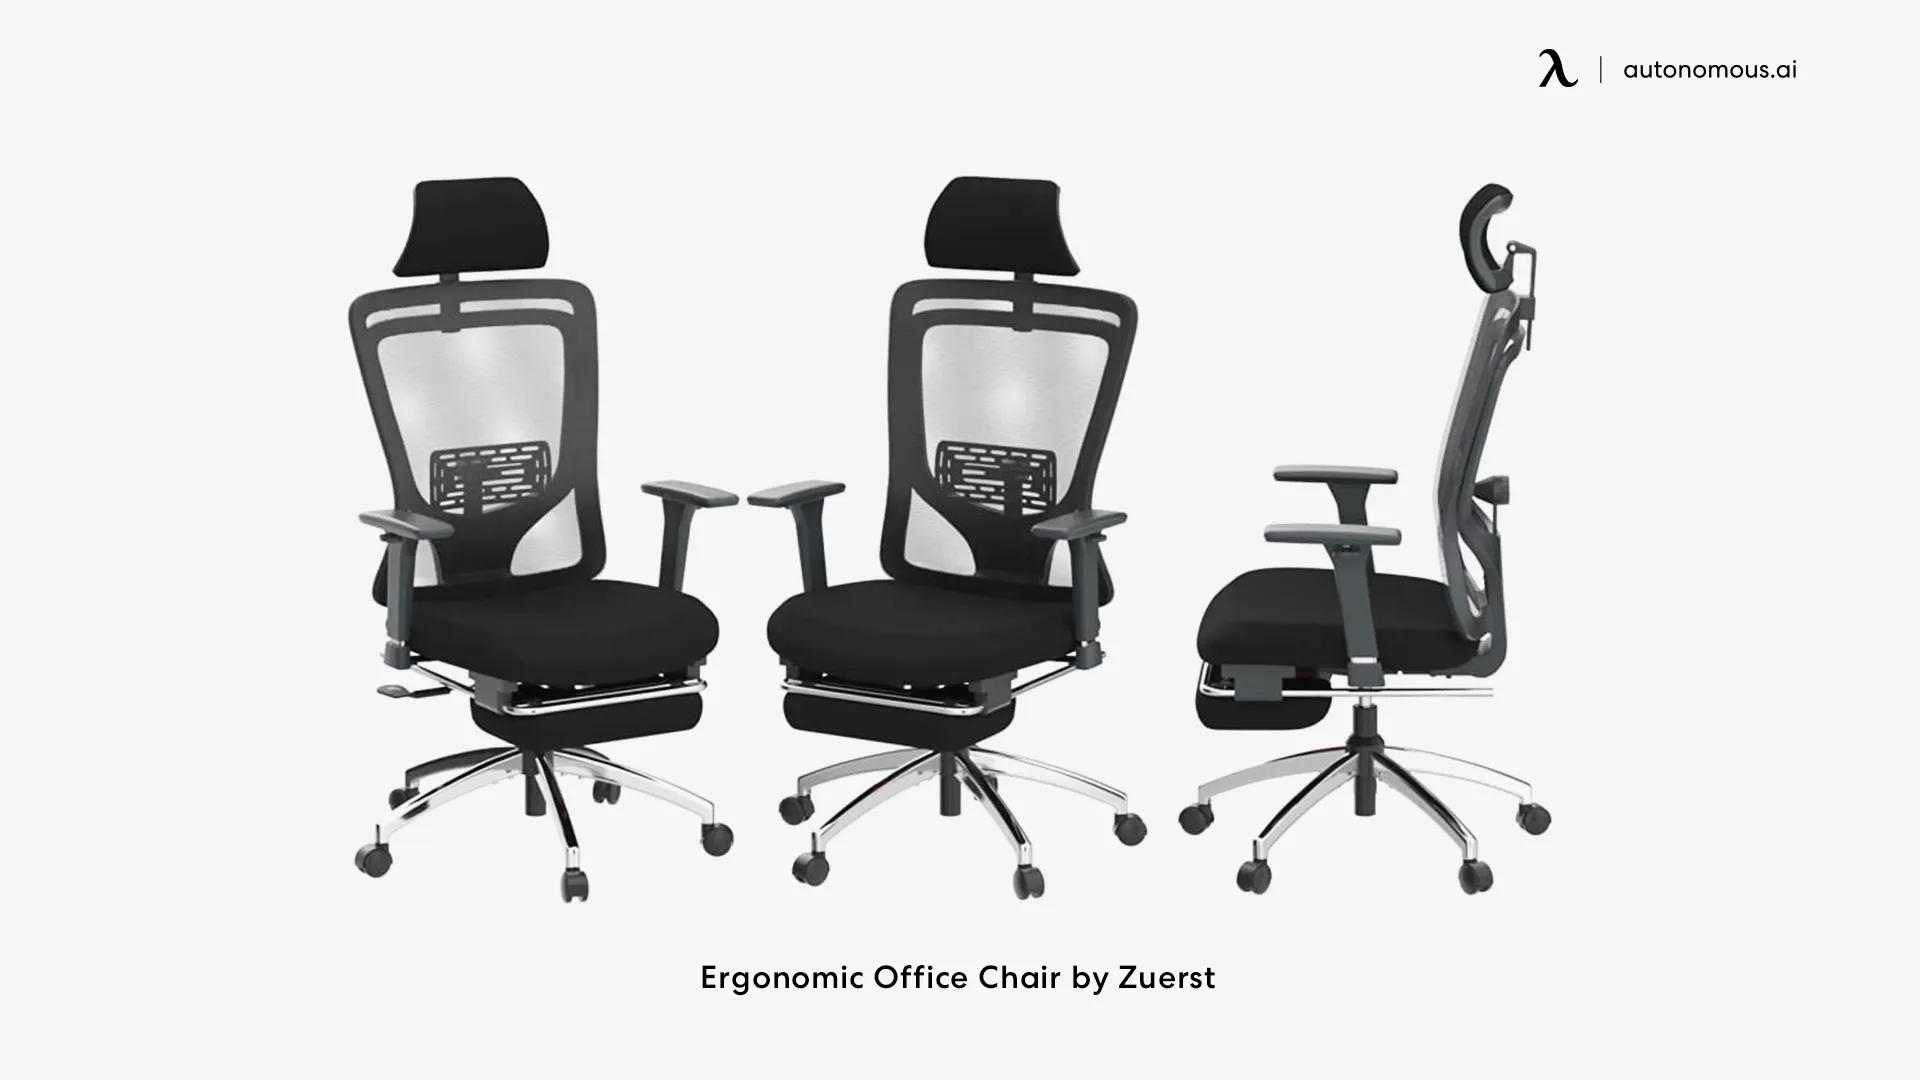 Ergonomic Office Chair by Zuerst